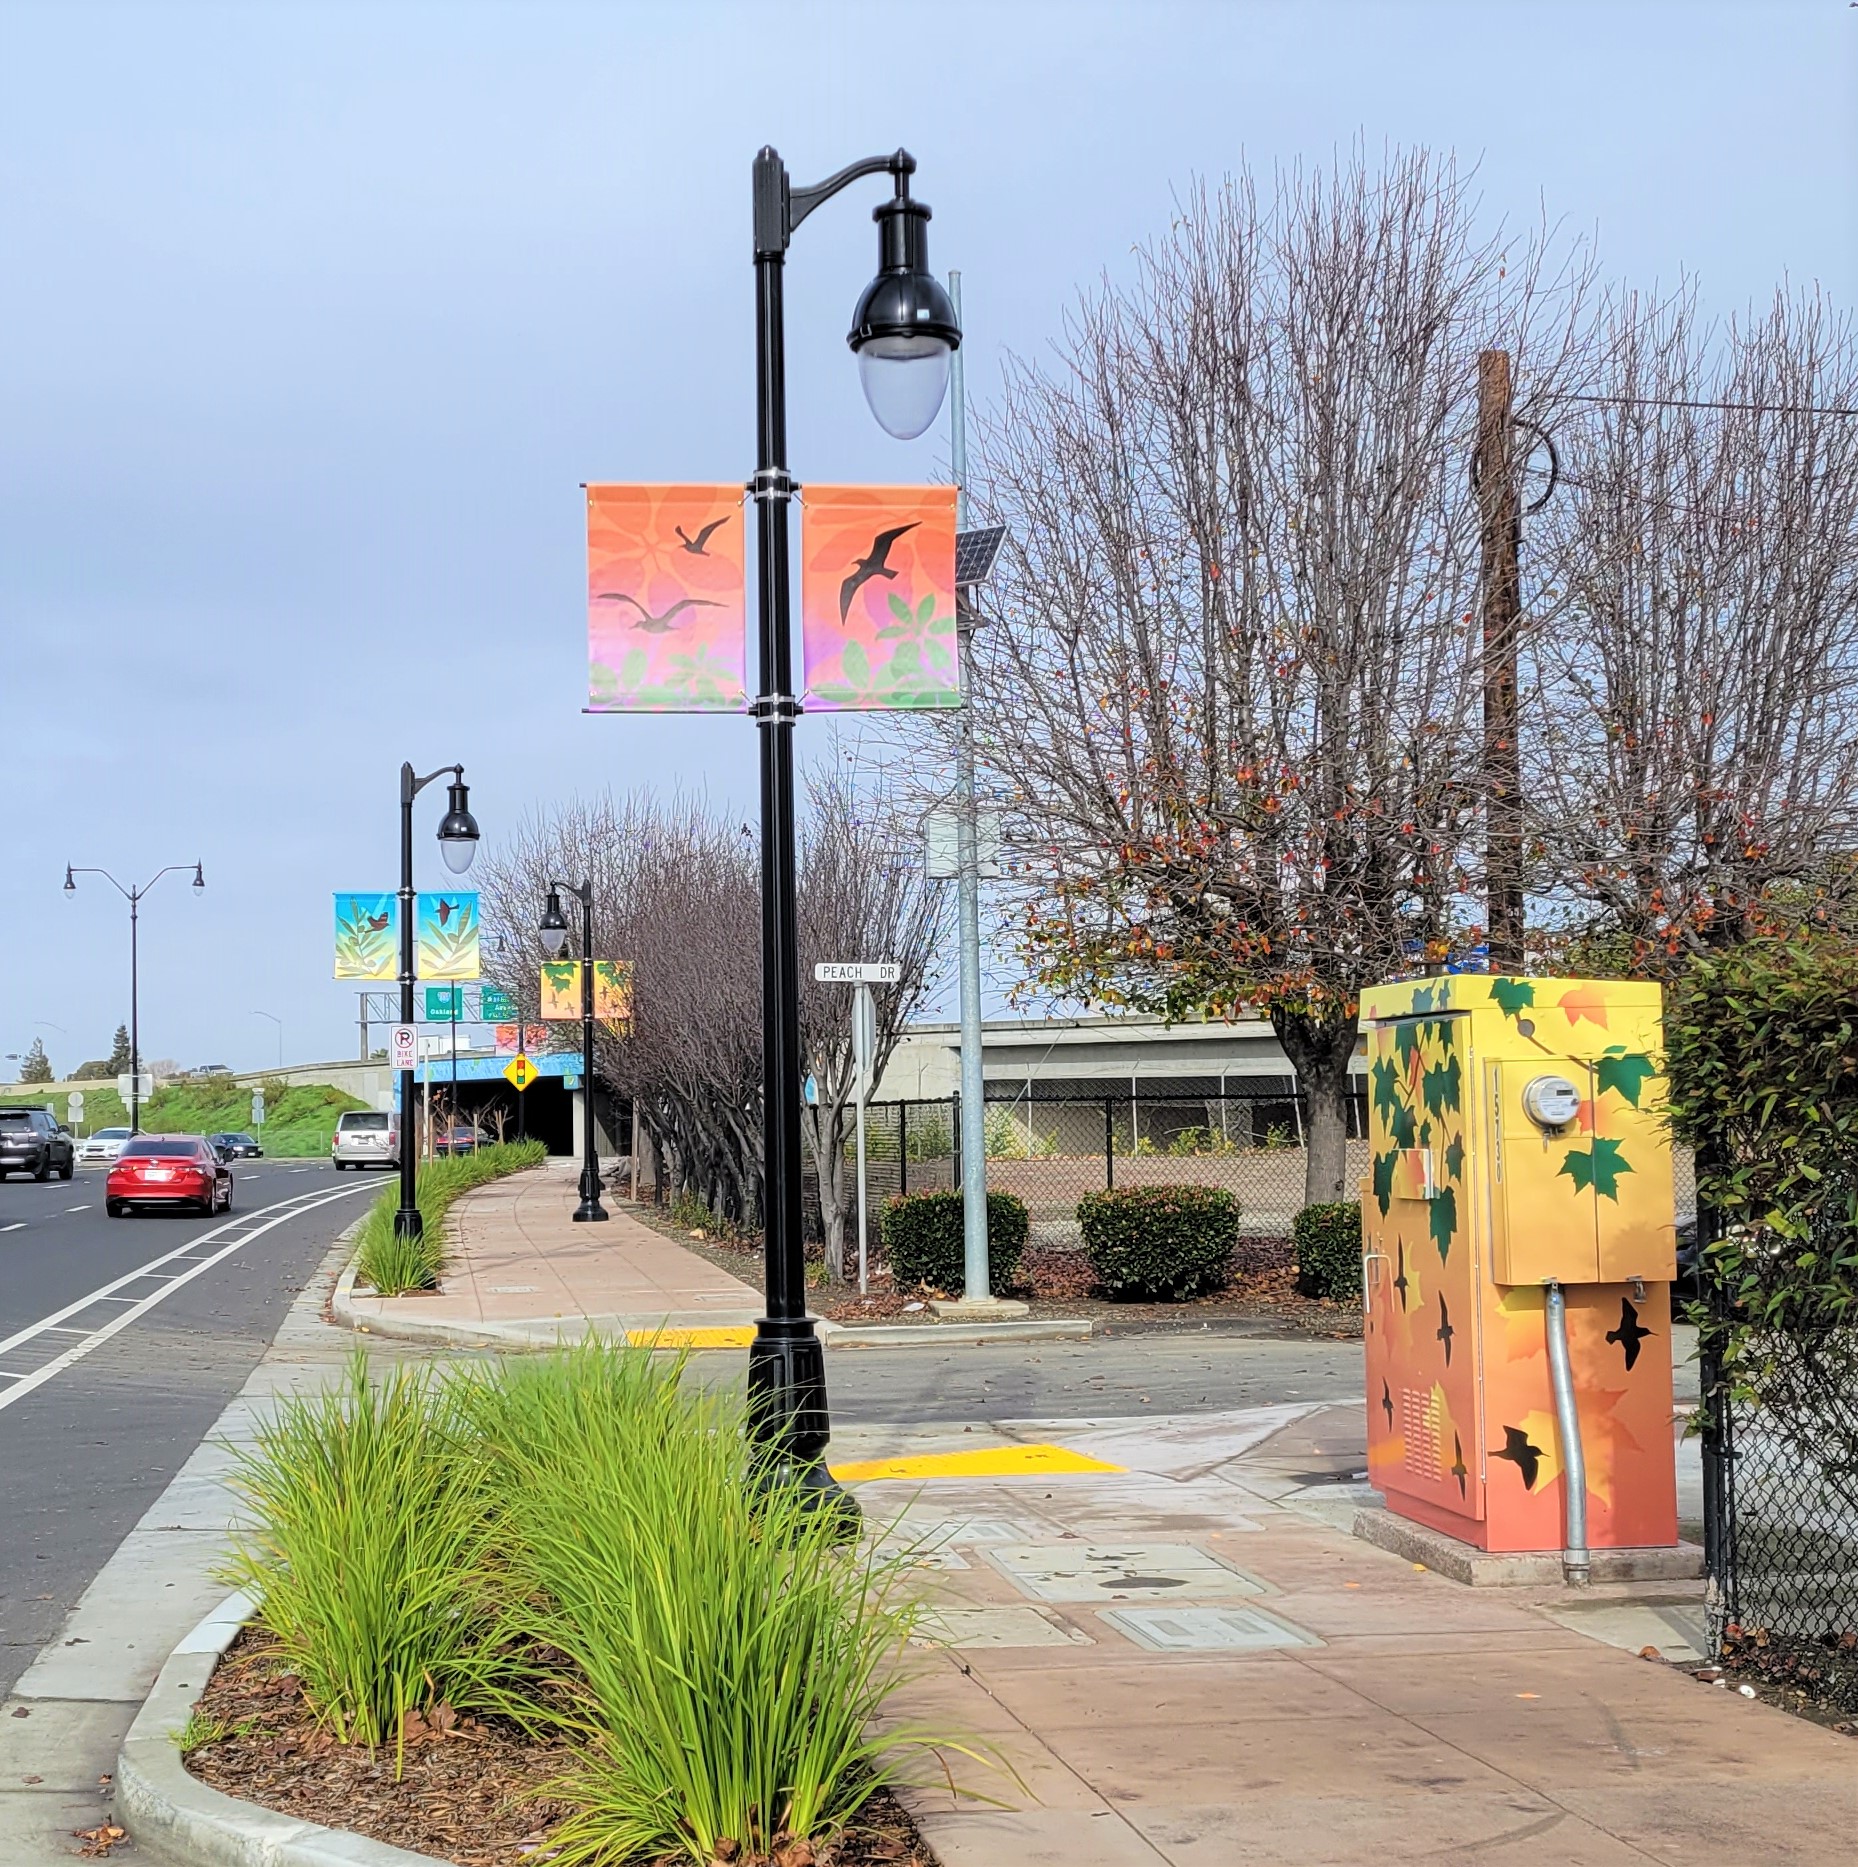 Public Art by Artist Vanessa Marsh for the Hesperian Boulevard Corridor Improvement Project